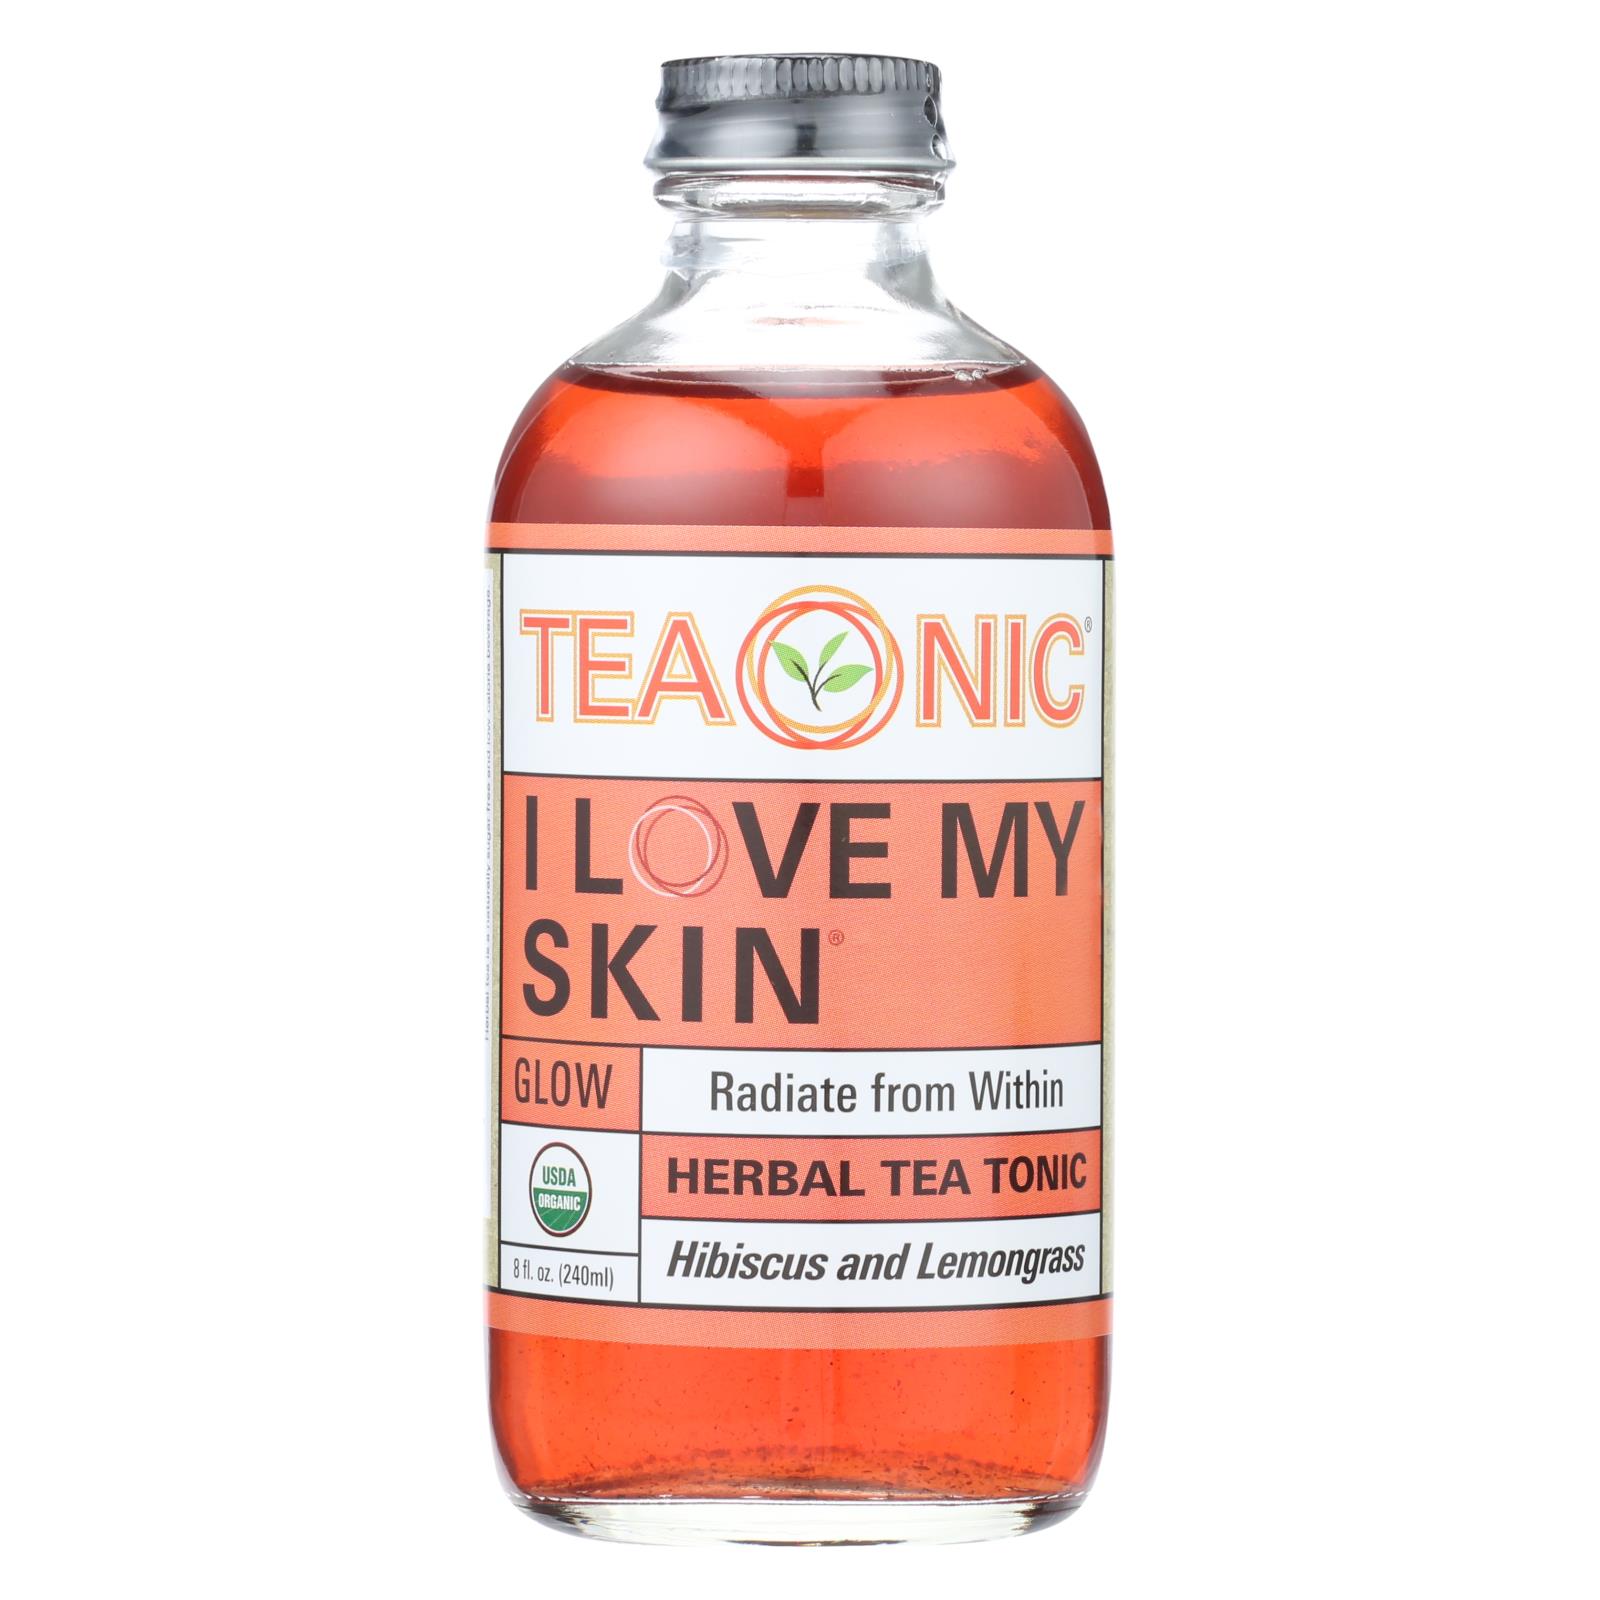 Teaonic, I Love My Skin Herbal Tea Supplement - 6개 묶음상품 - 8 FZ